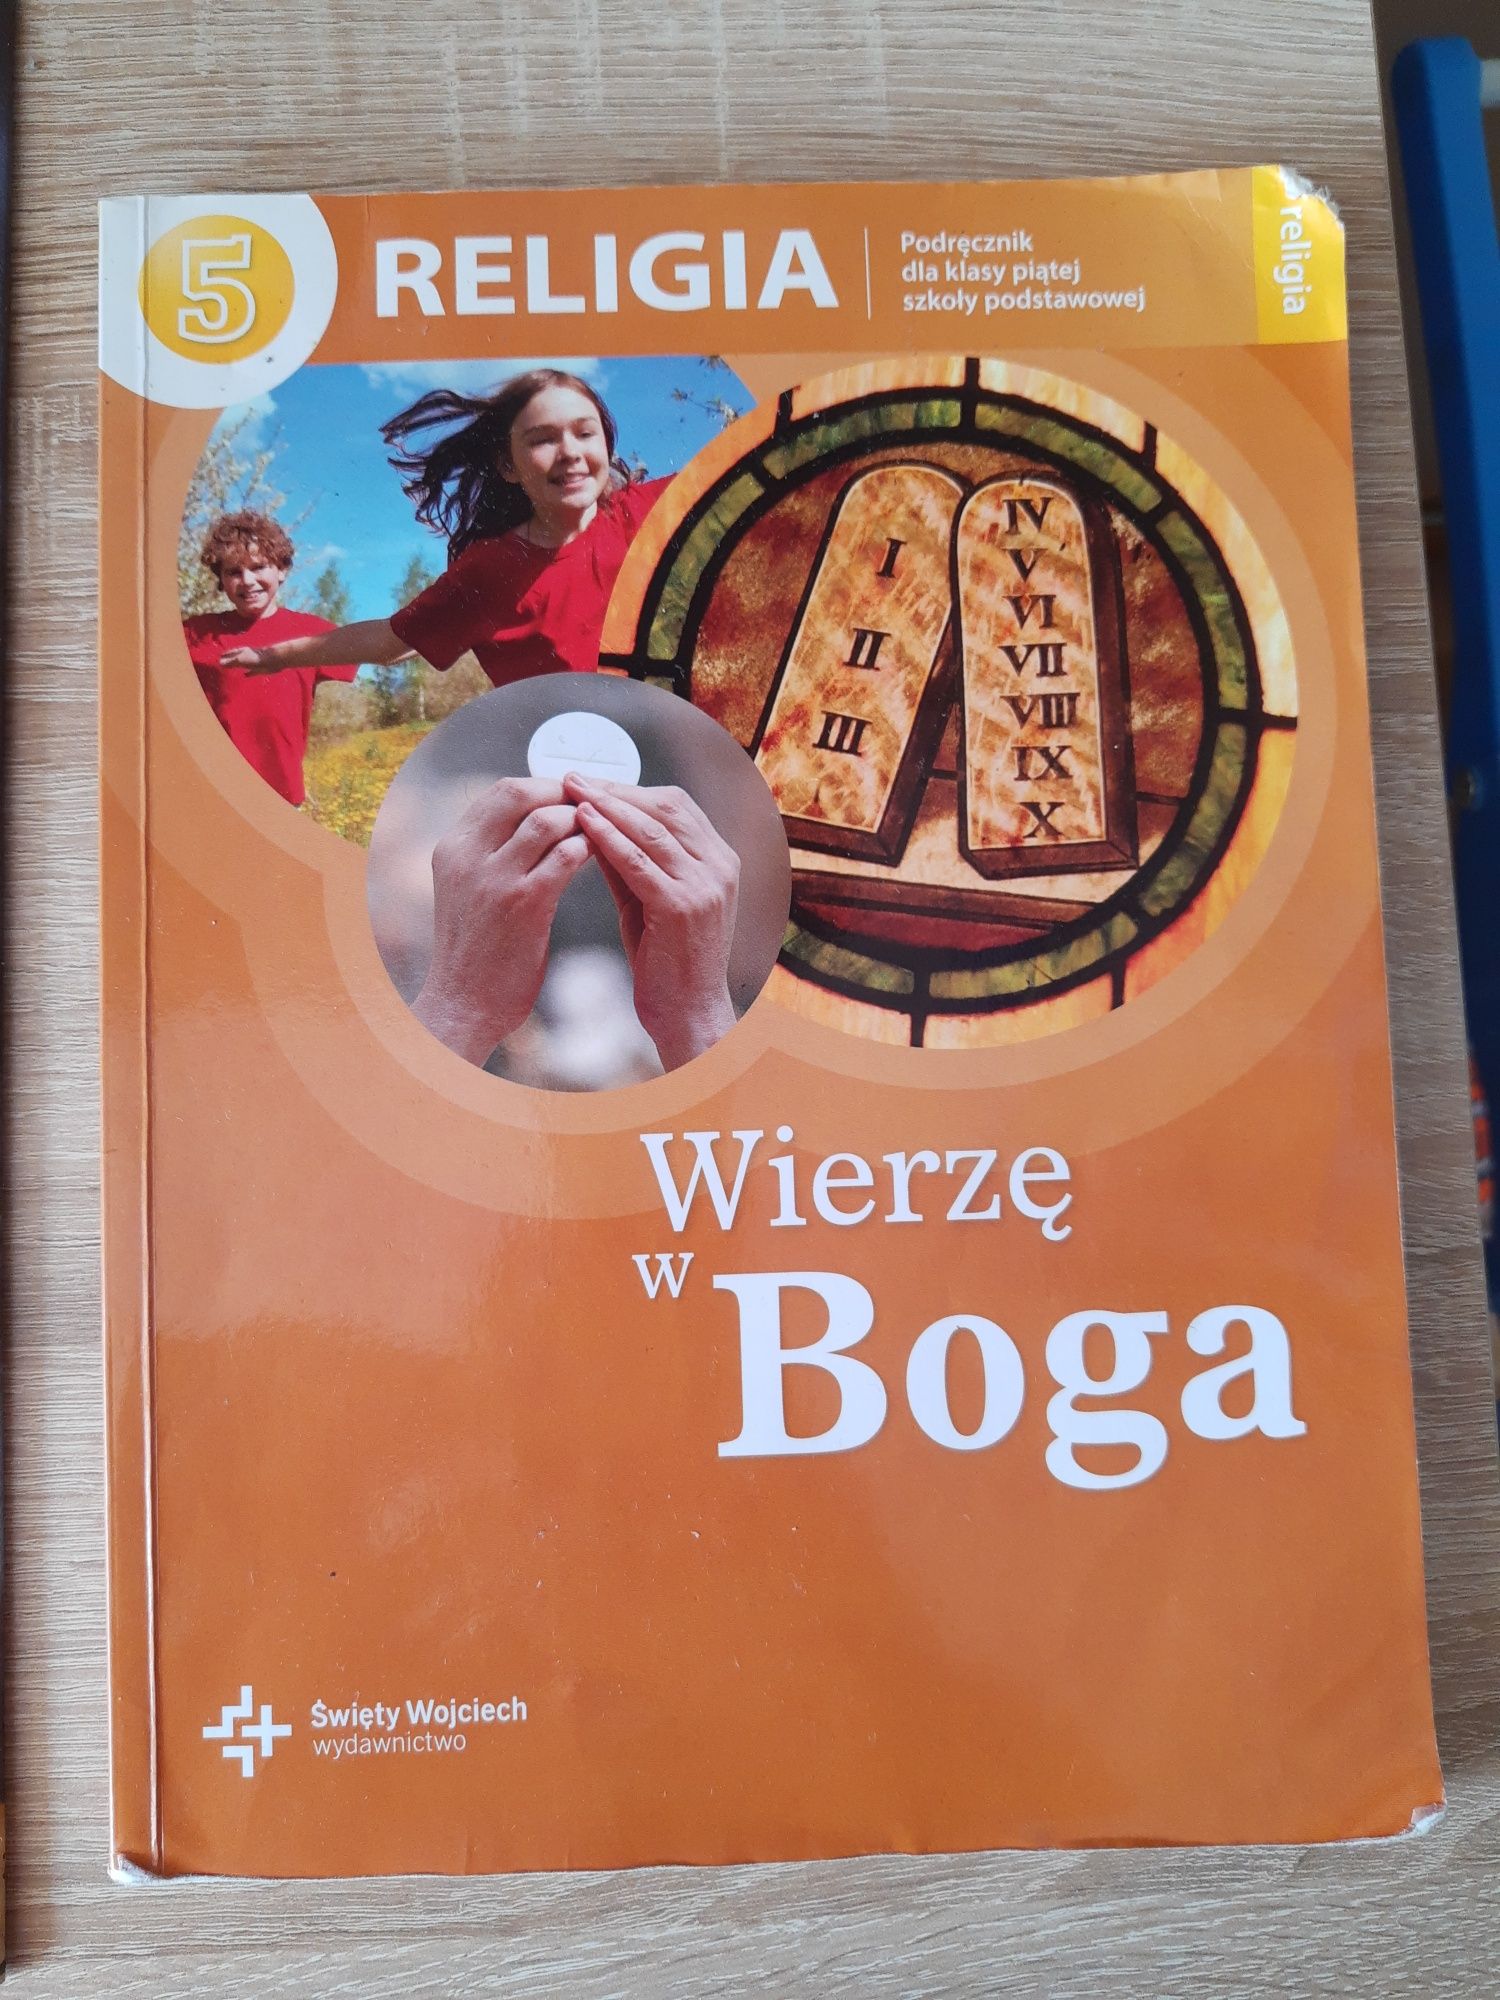 Podręcznik do religii do klasy 5